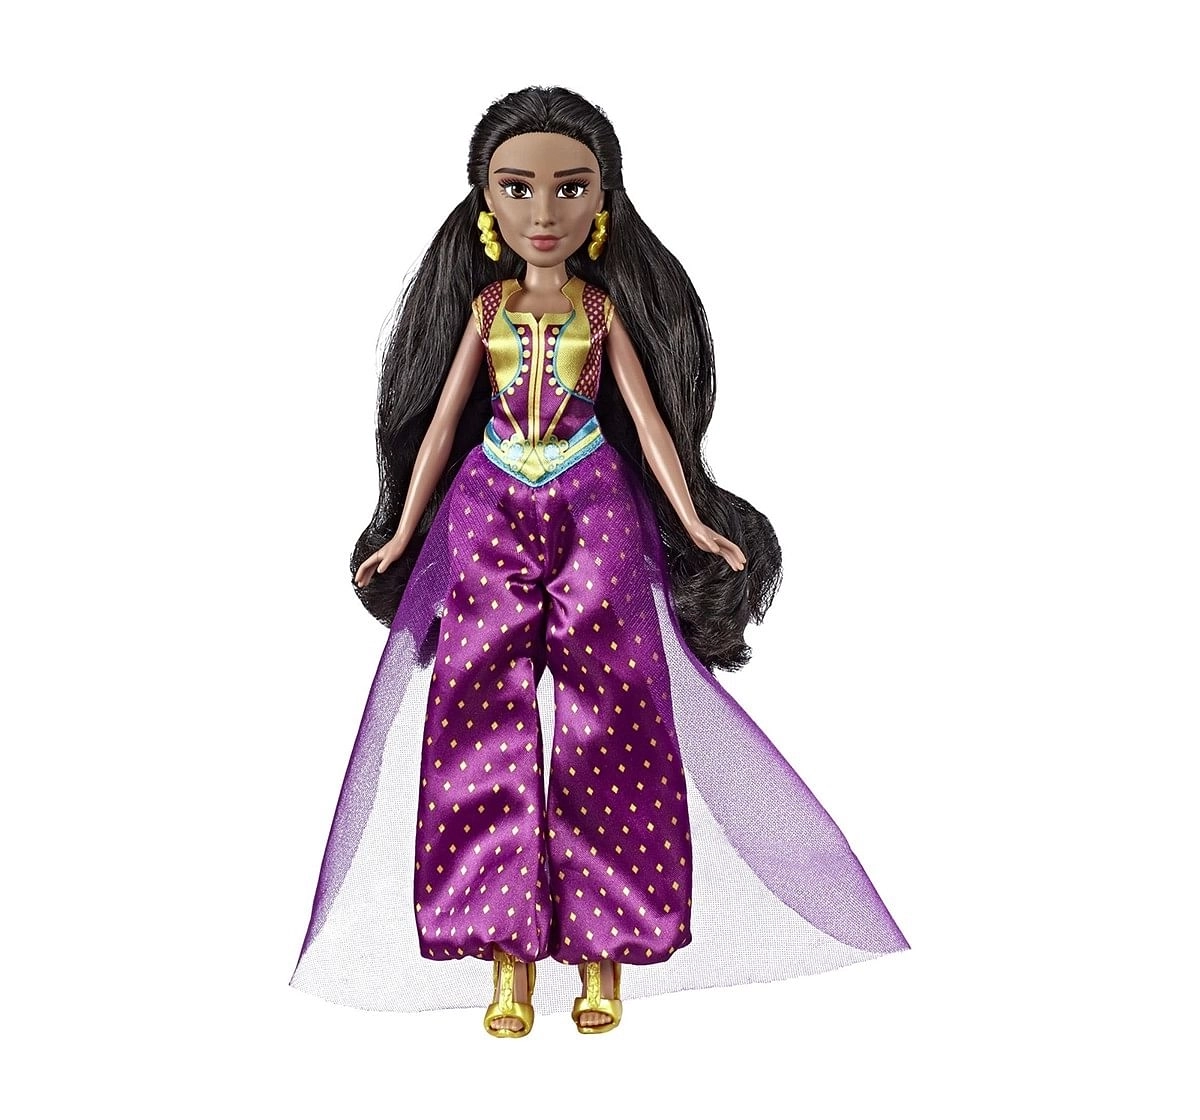 Disney Aladdin Doll Assorted Dolls & Accessories for Kids age 3Y+ 